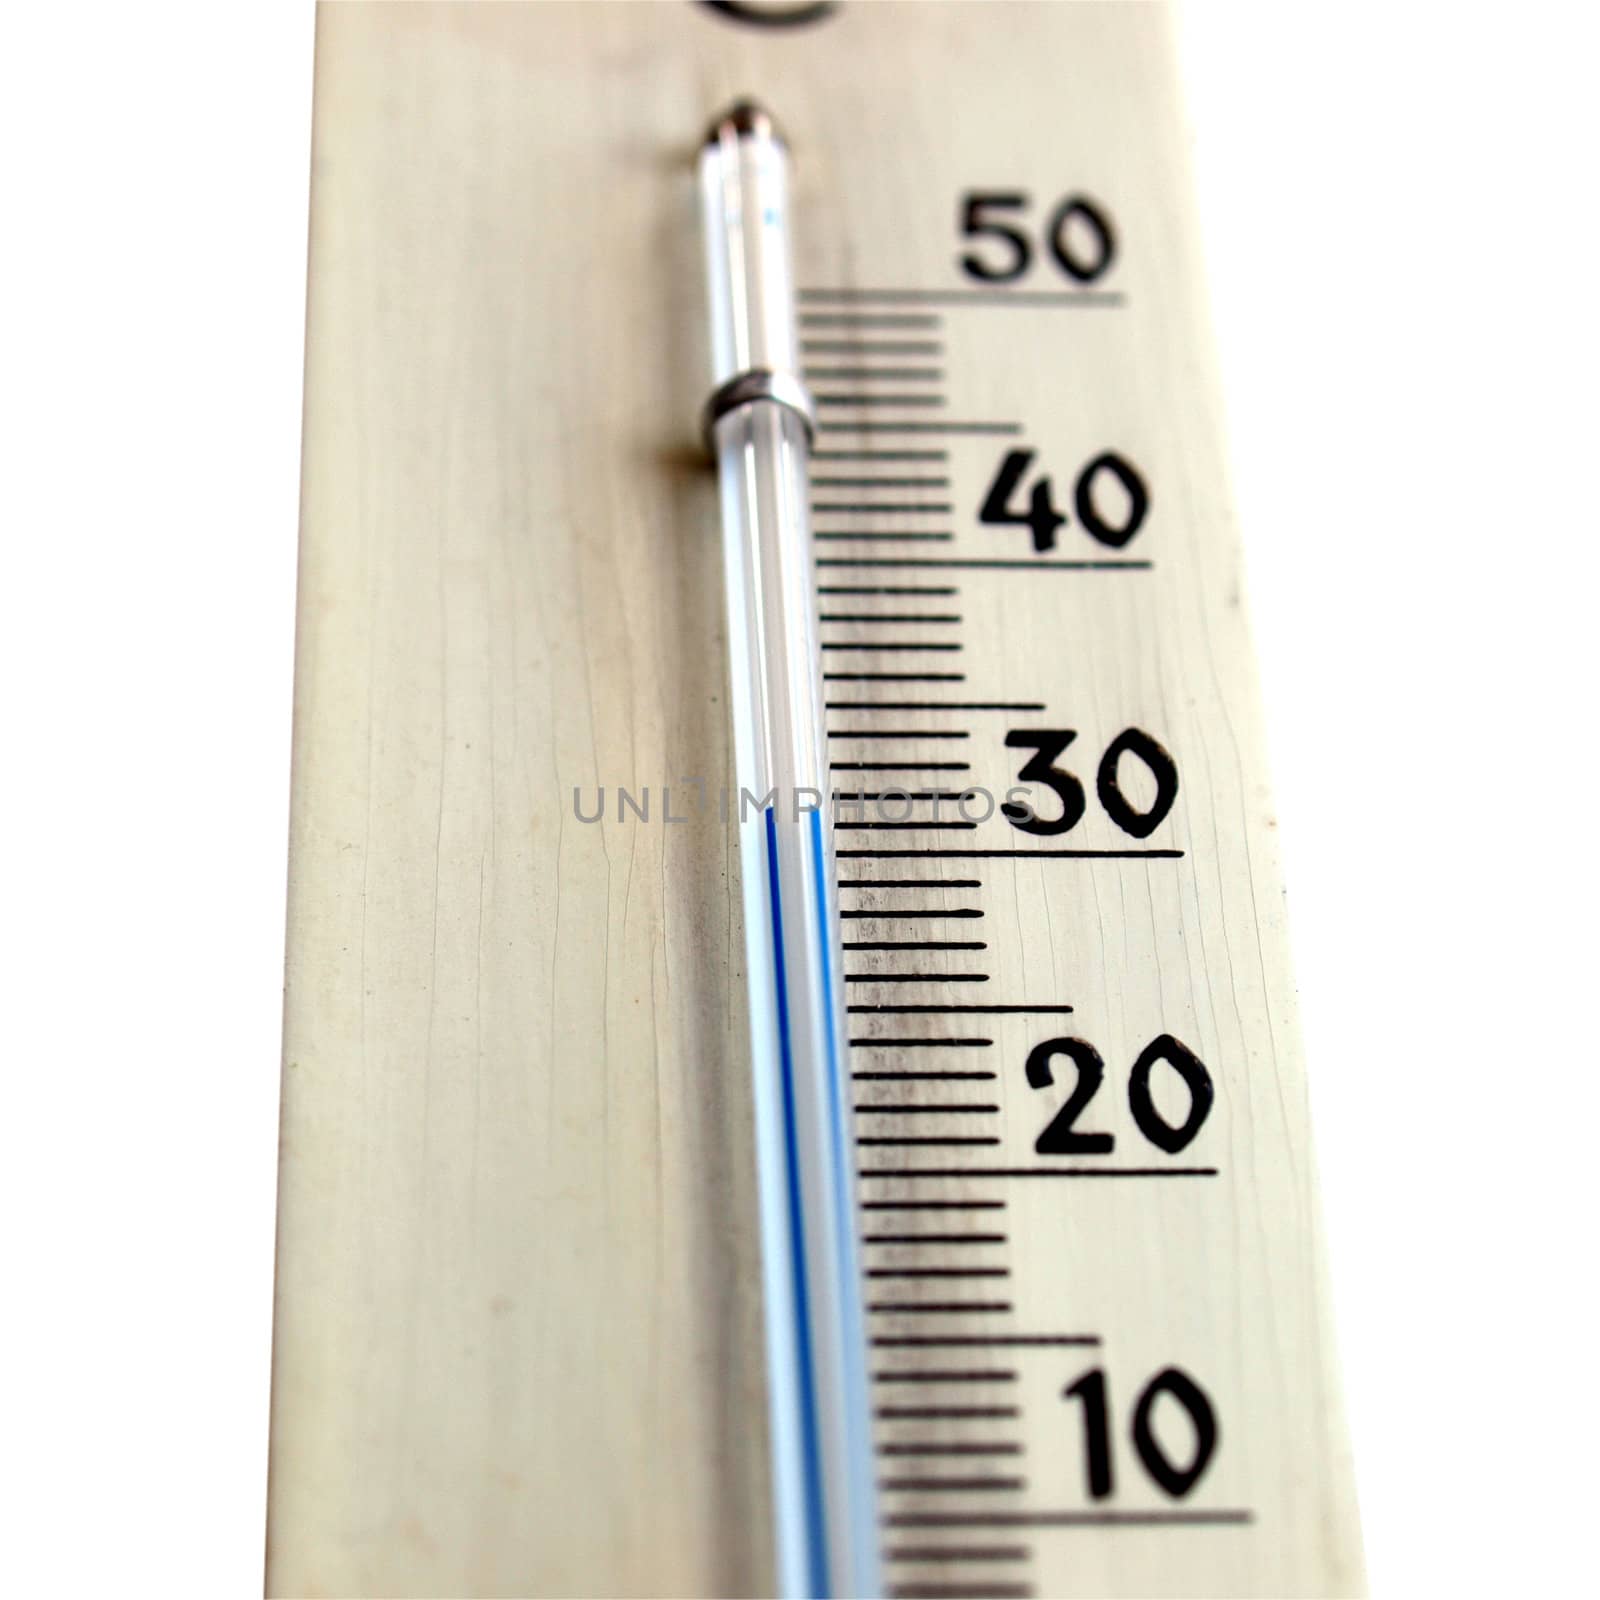 Thermometer by claudiodivizia